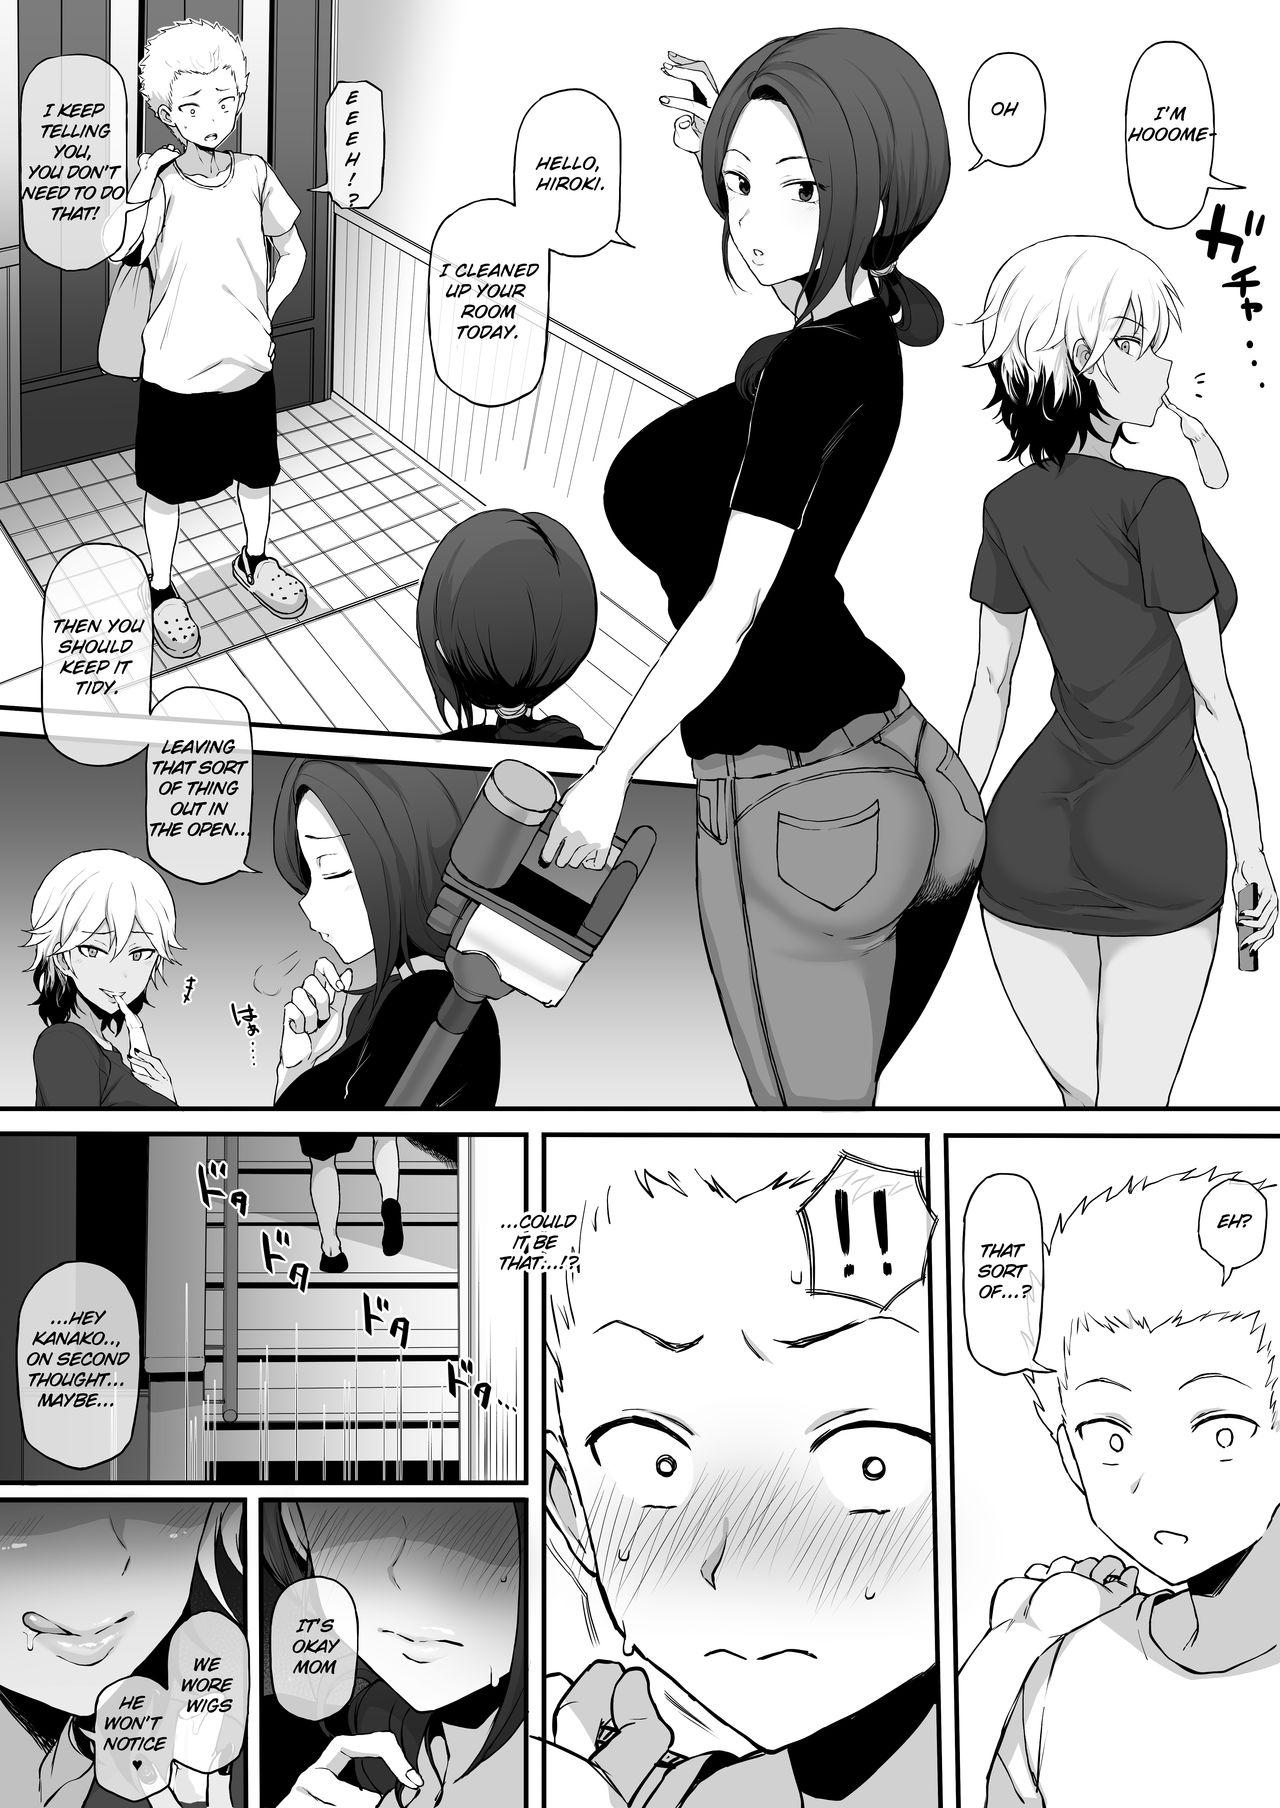 Kokujin no Tenkousei NTR ru Chapters 1-6 part 1 Plus Bonus chapter: Stolen Mother’s Breasts 25